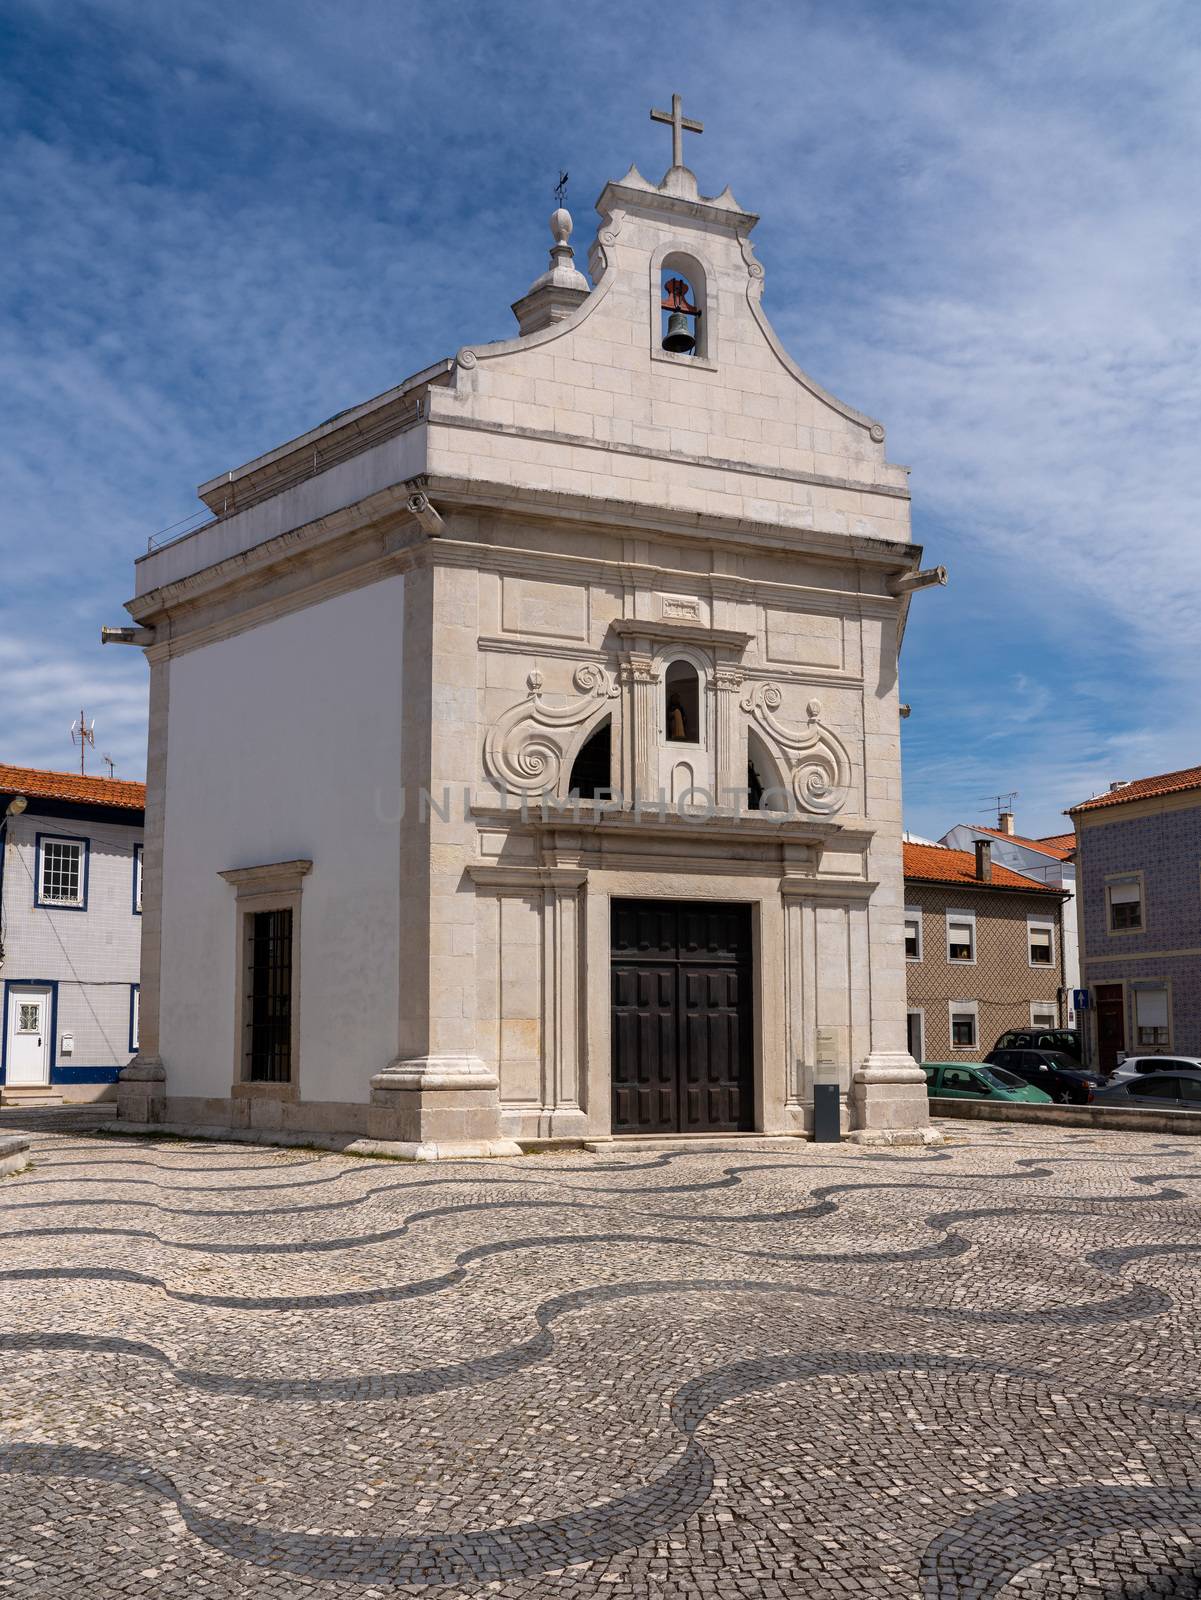 Capela de Sao Goncalinho, the patron saint of Aveiro in Portugal by steheap